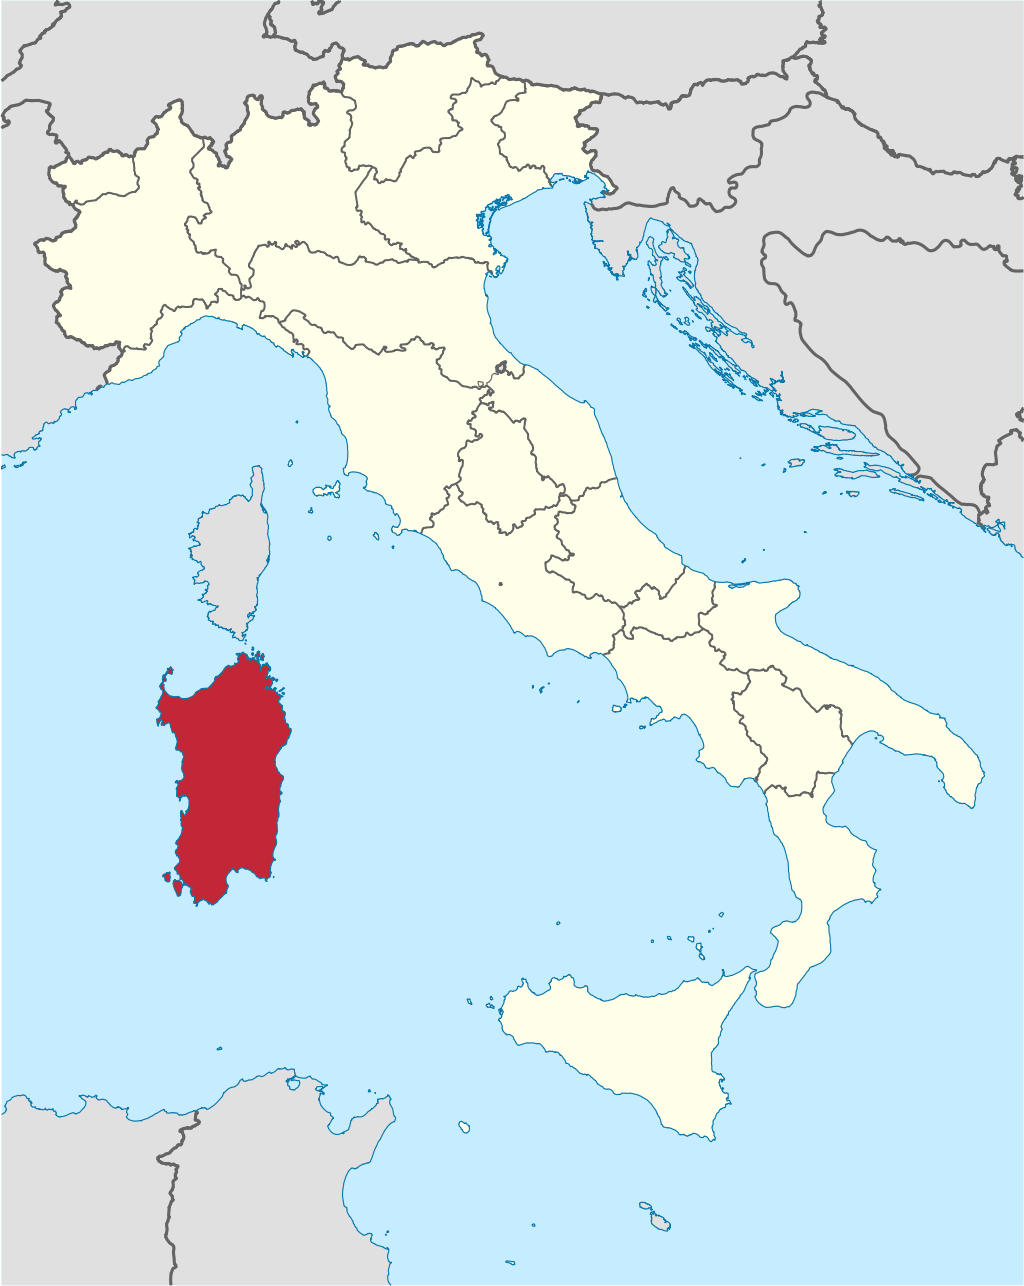 Carabinieri Cam Urbex location or around the region Sardegna (Nuoro), Italy